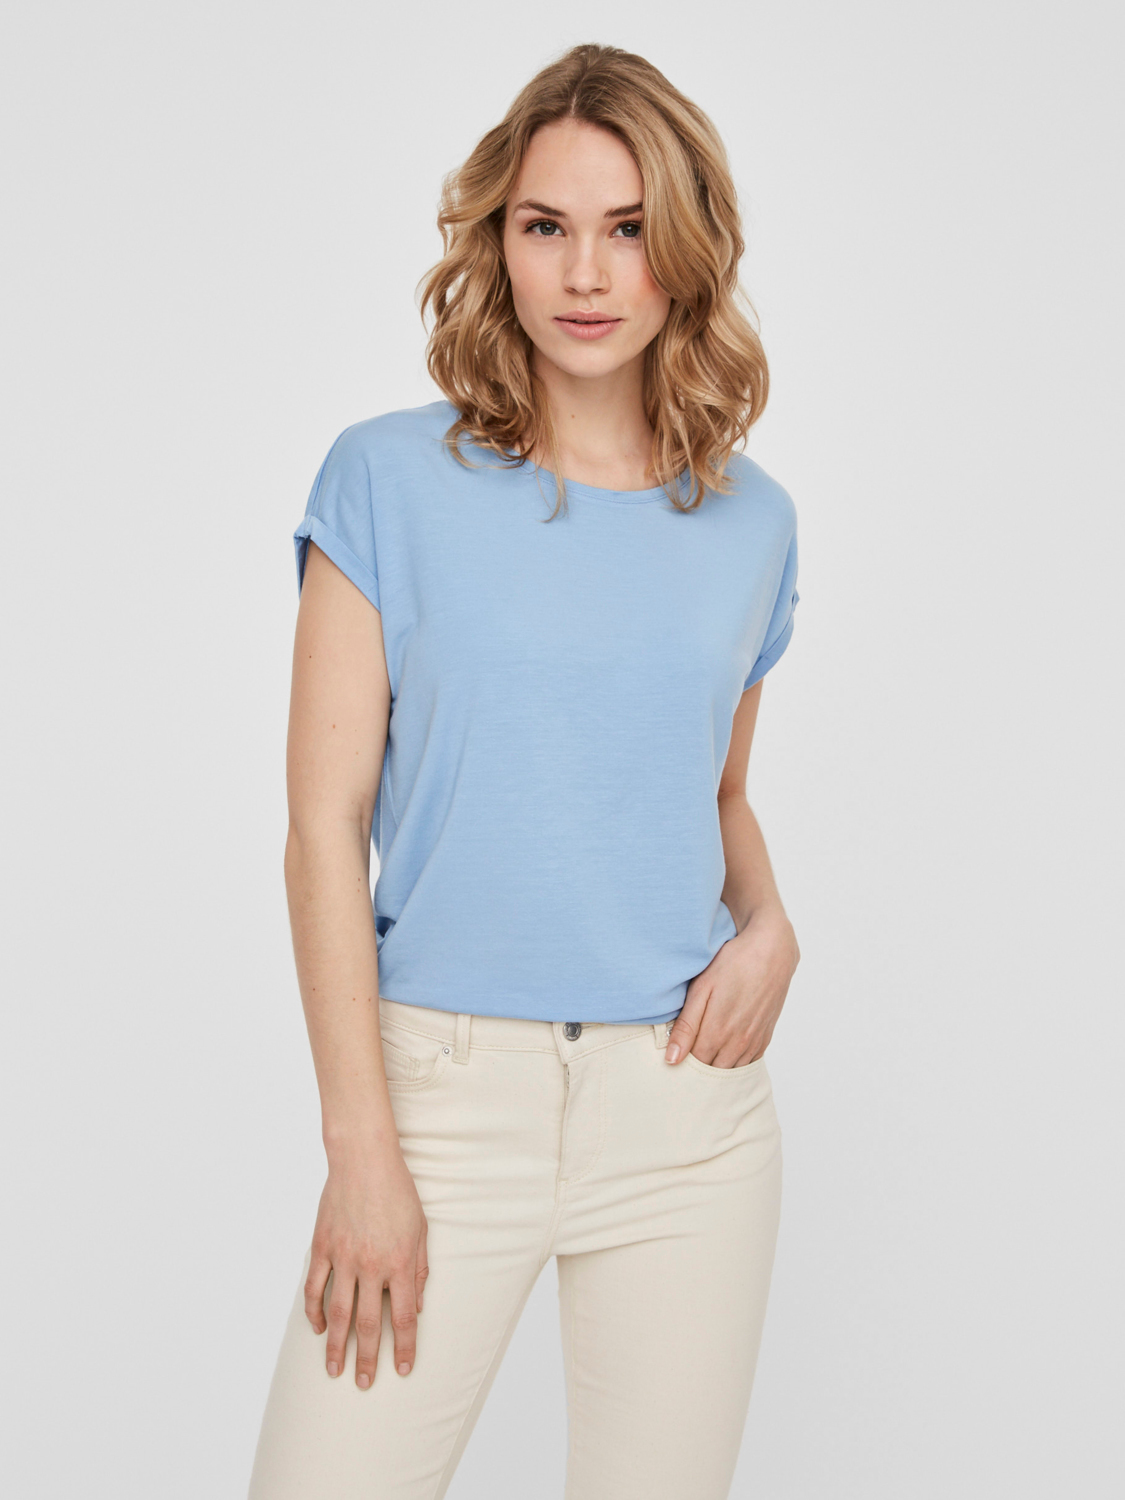 FINAL SALE- AWARE | Ava T-Shirt, PLACID BLUE, large